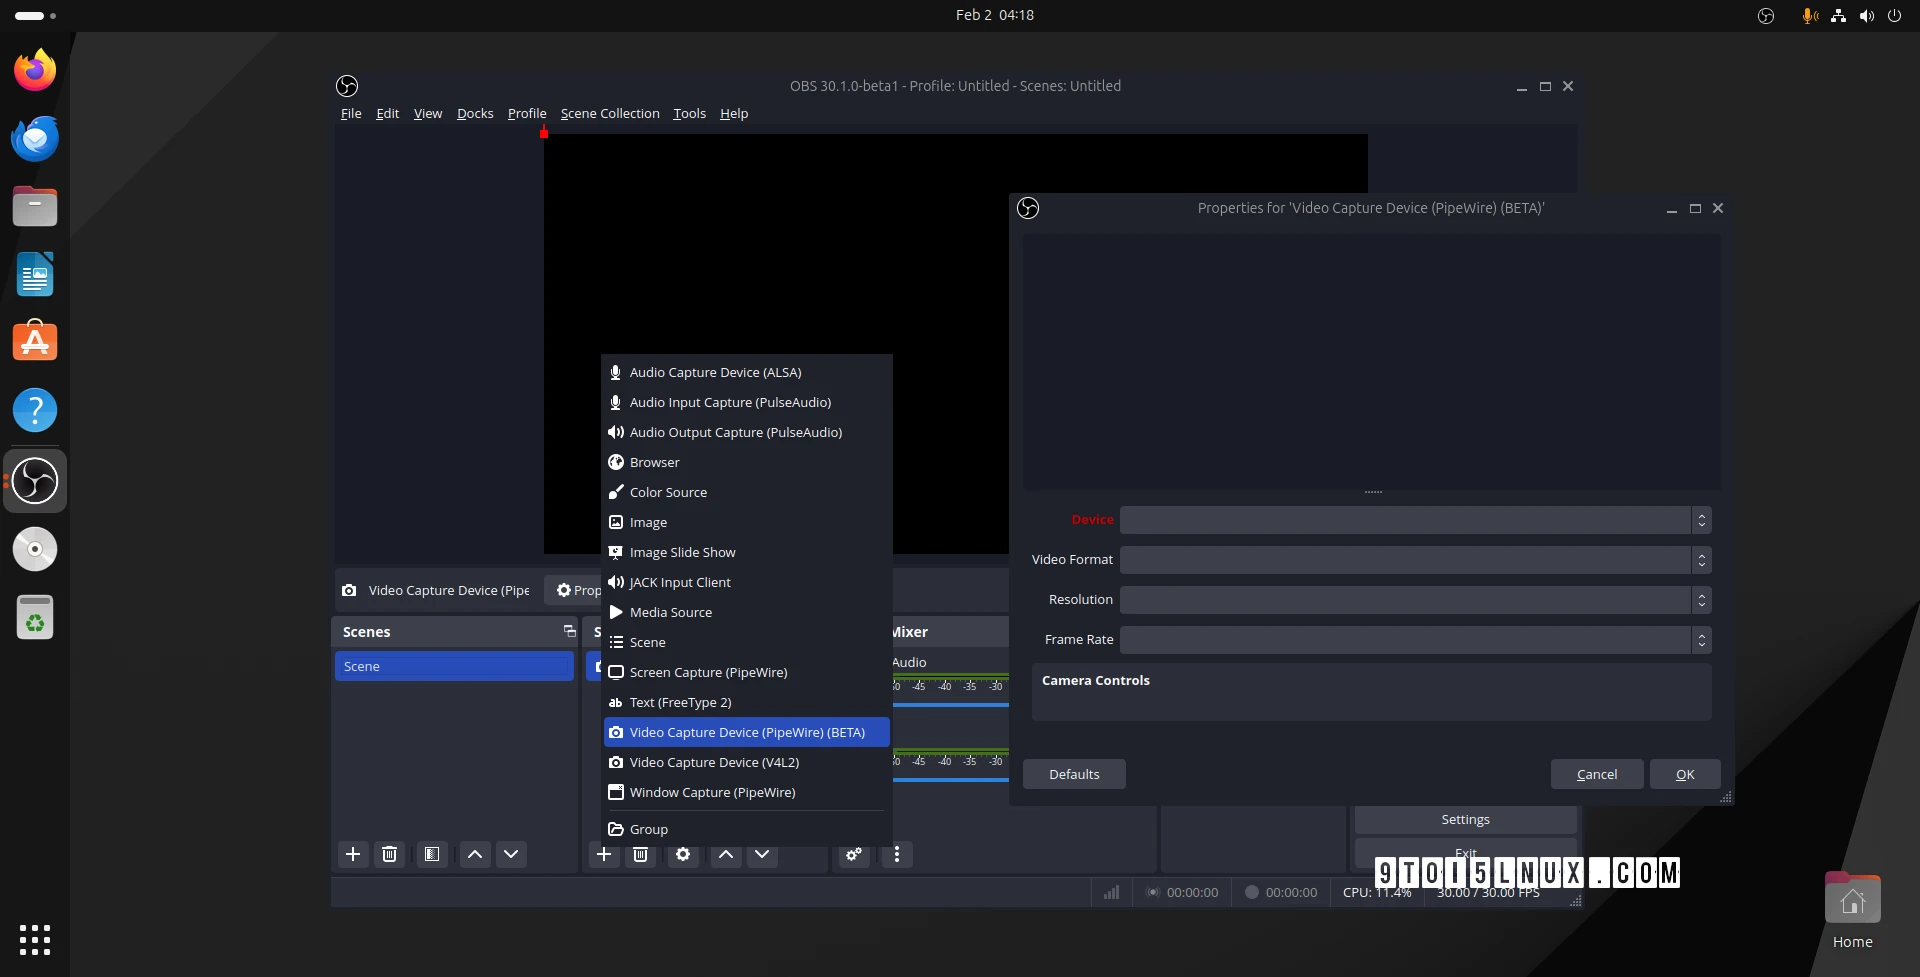 OBS Studio 30.1 Beta Adds AV1 Support for VA-API, PipeWire Camera Source